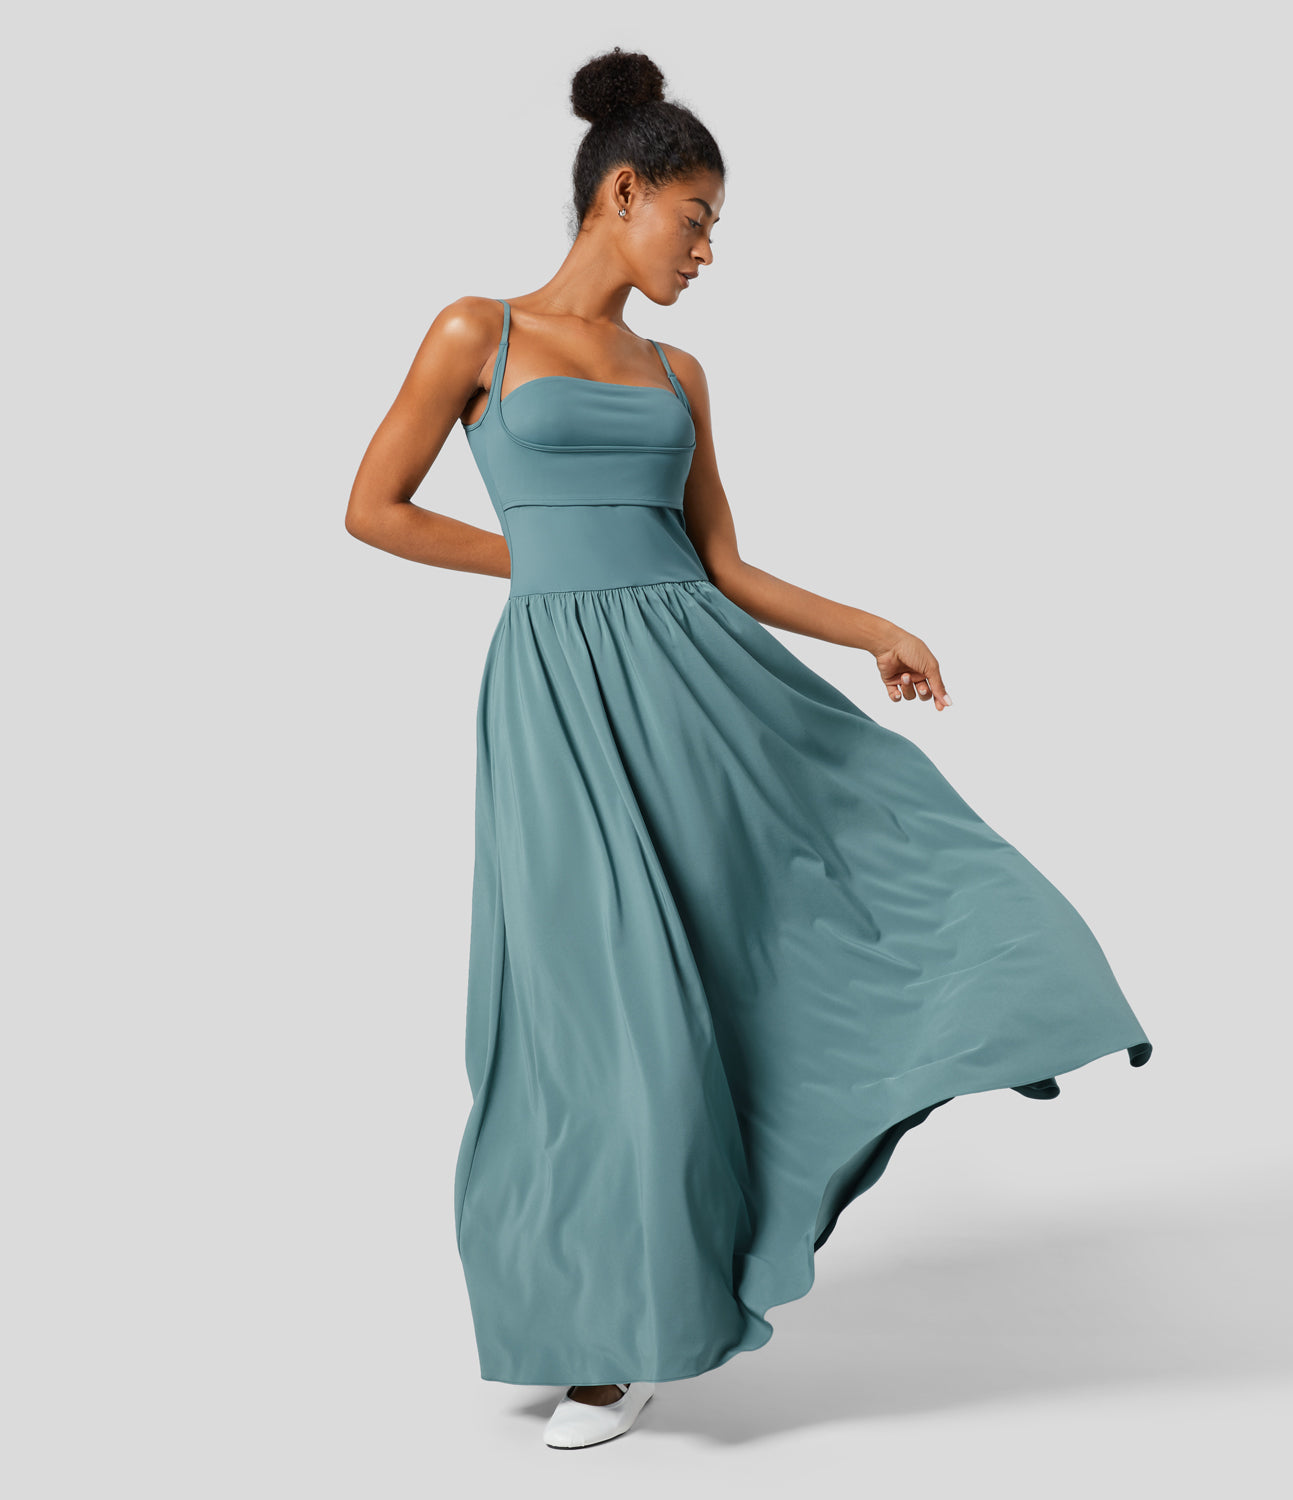 

Halara Breezefulв„ў Backless Side Pocket Plicated Flowy Flare Maxi Quick Dry Casual Slip Dress Casual Dress - Stone Blue -  slip dress